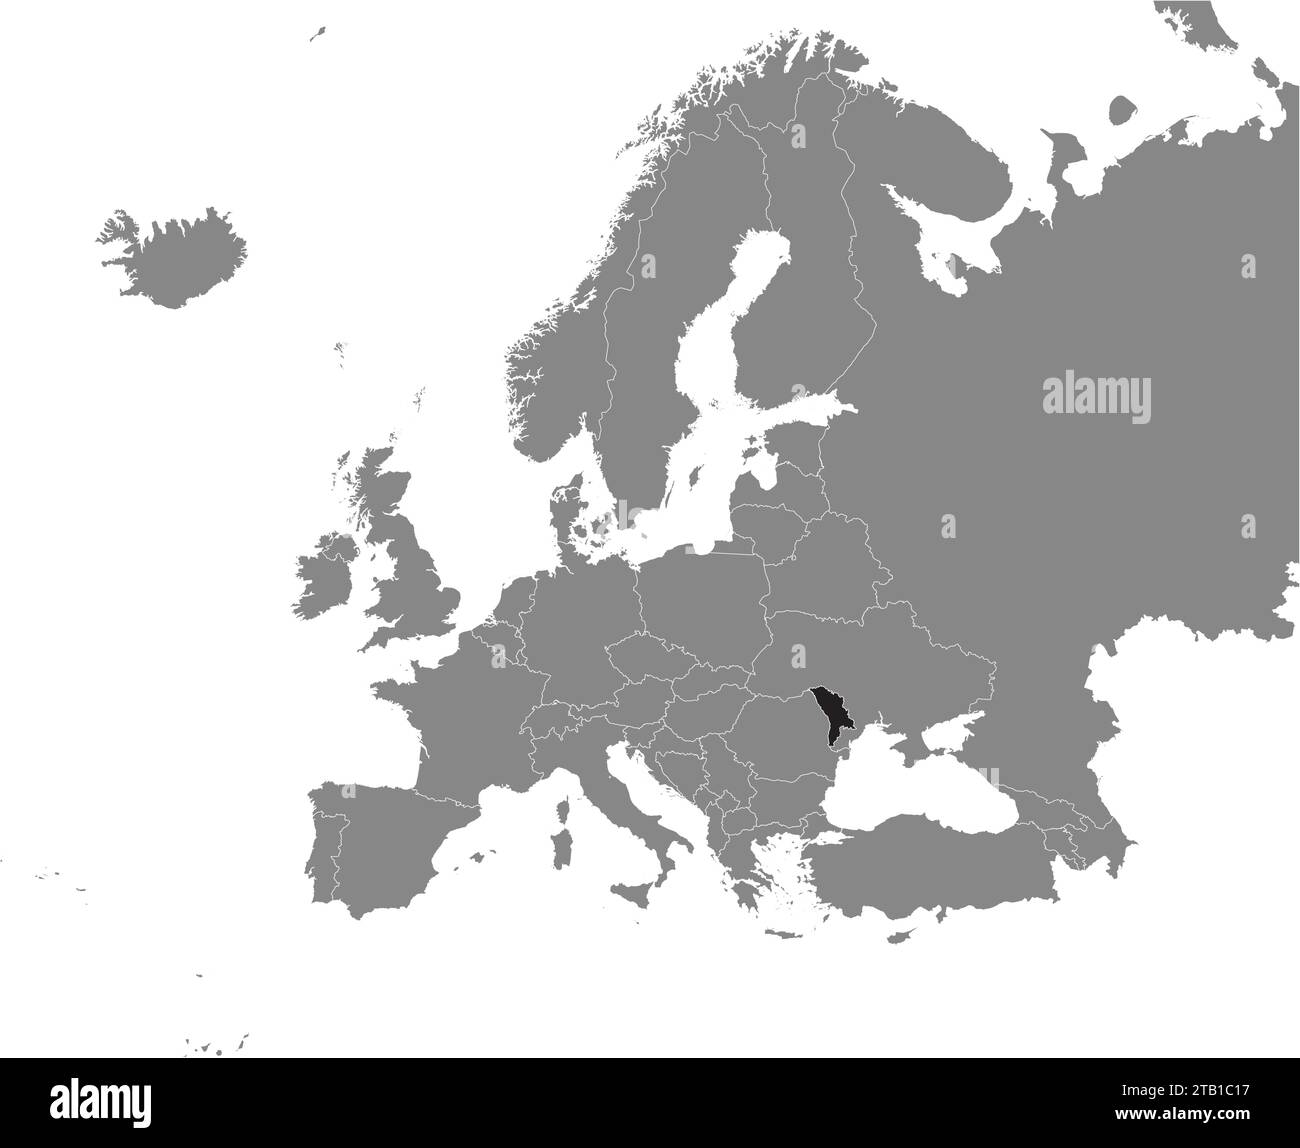 Soviet union europe map Black and White Stock Photos & Images - Alamy